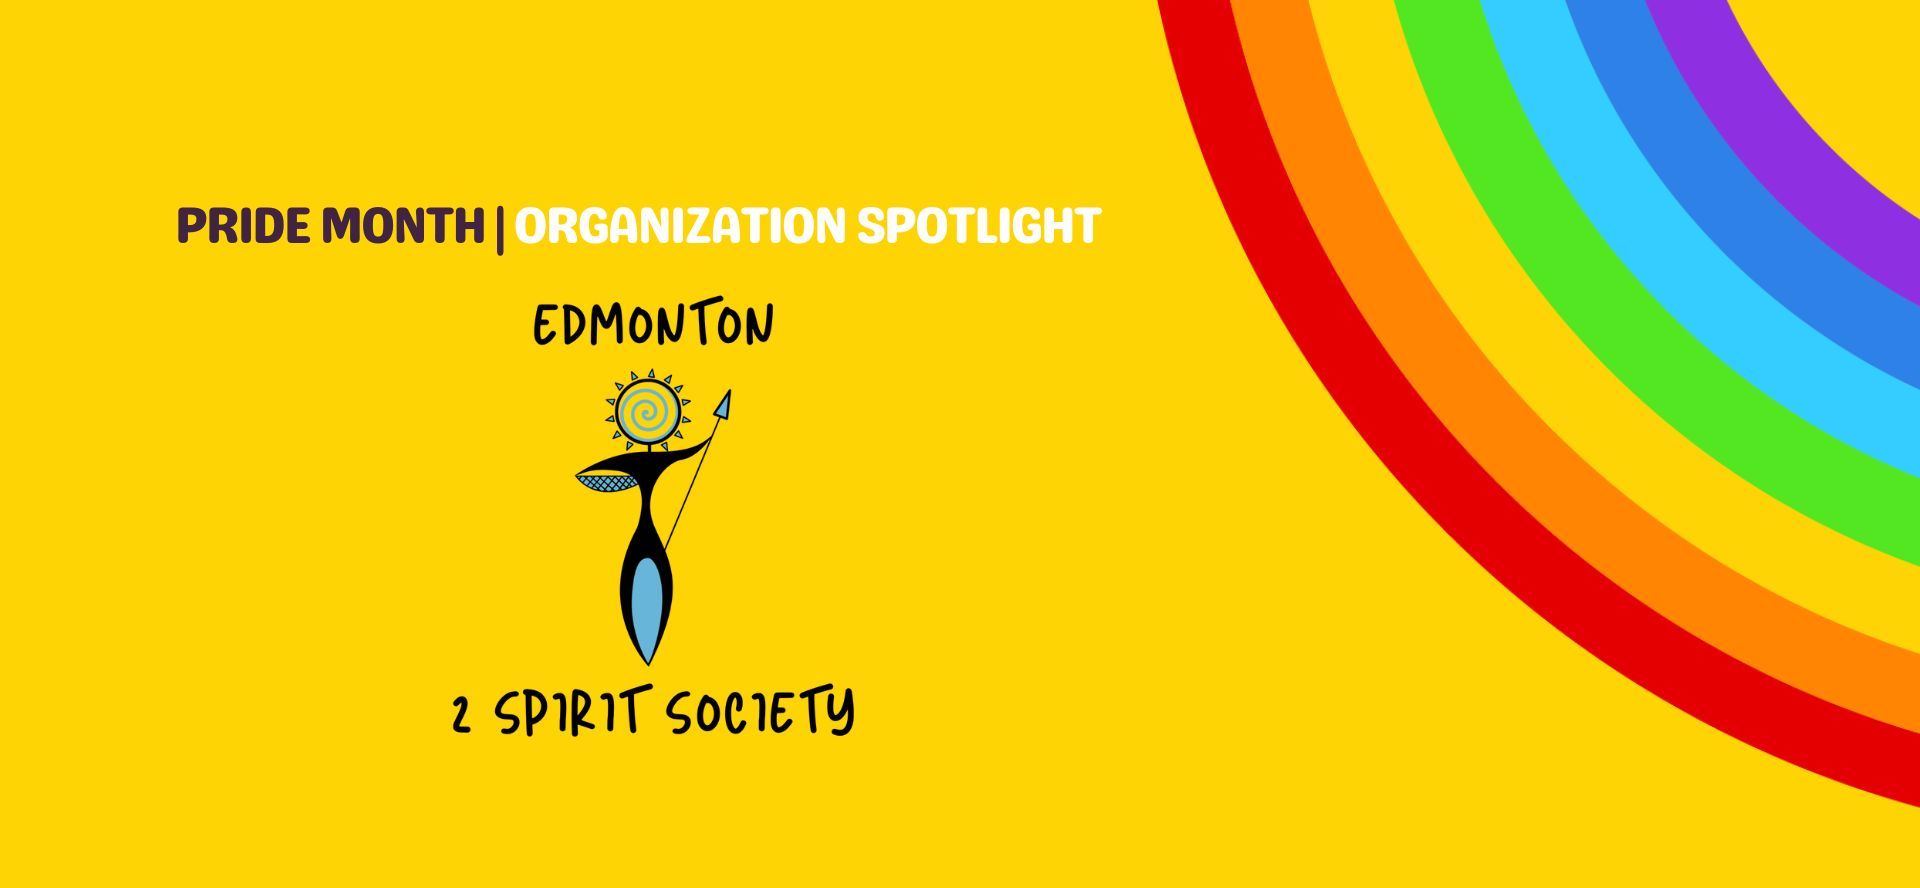 Edmonton 2 Spirit Society